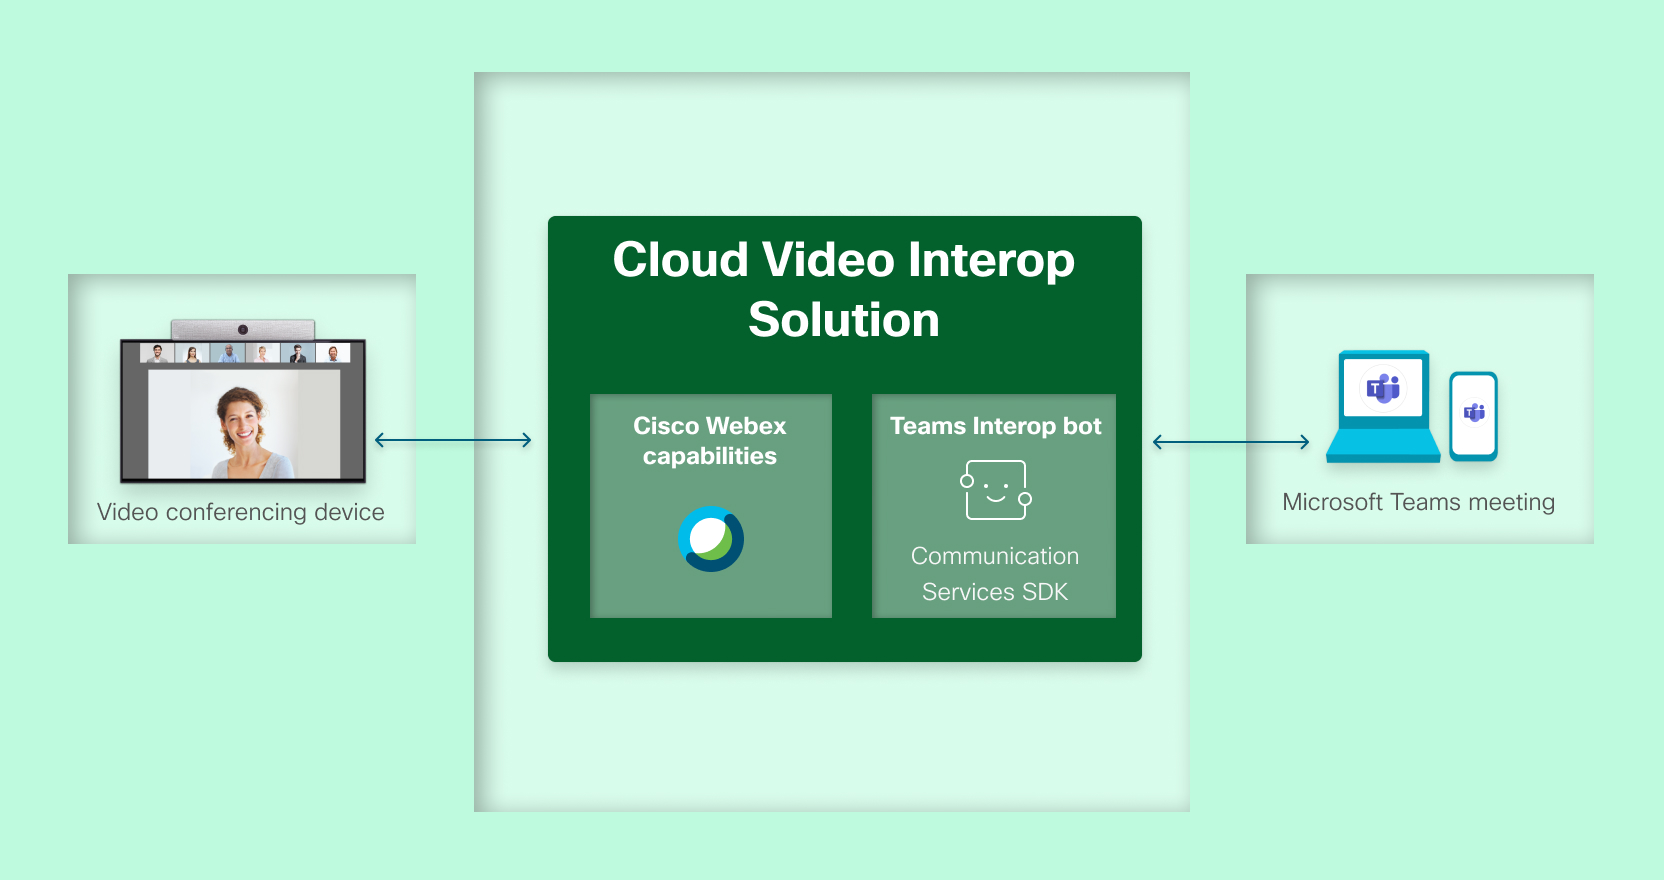 CVI architektúra kép https://docs.microsoft.com/en-us/microsoftteams/cloud-video-interop alapján